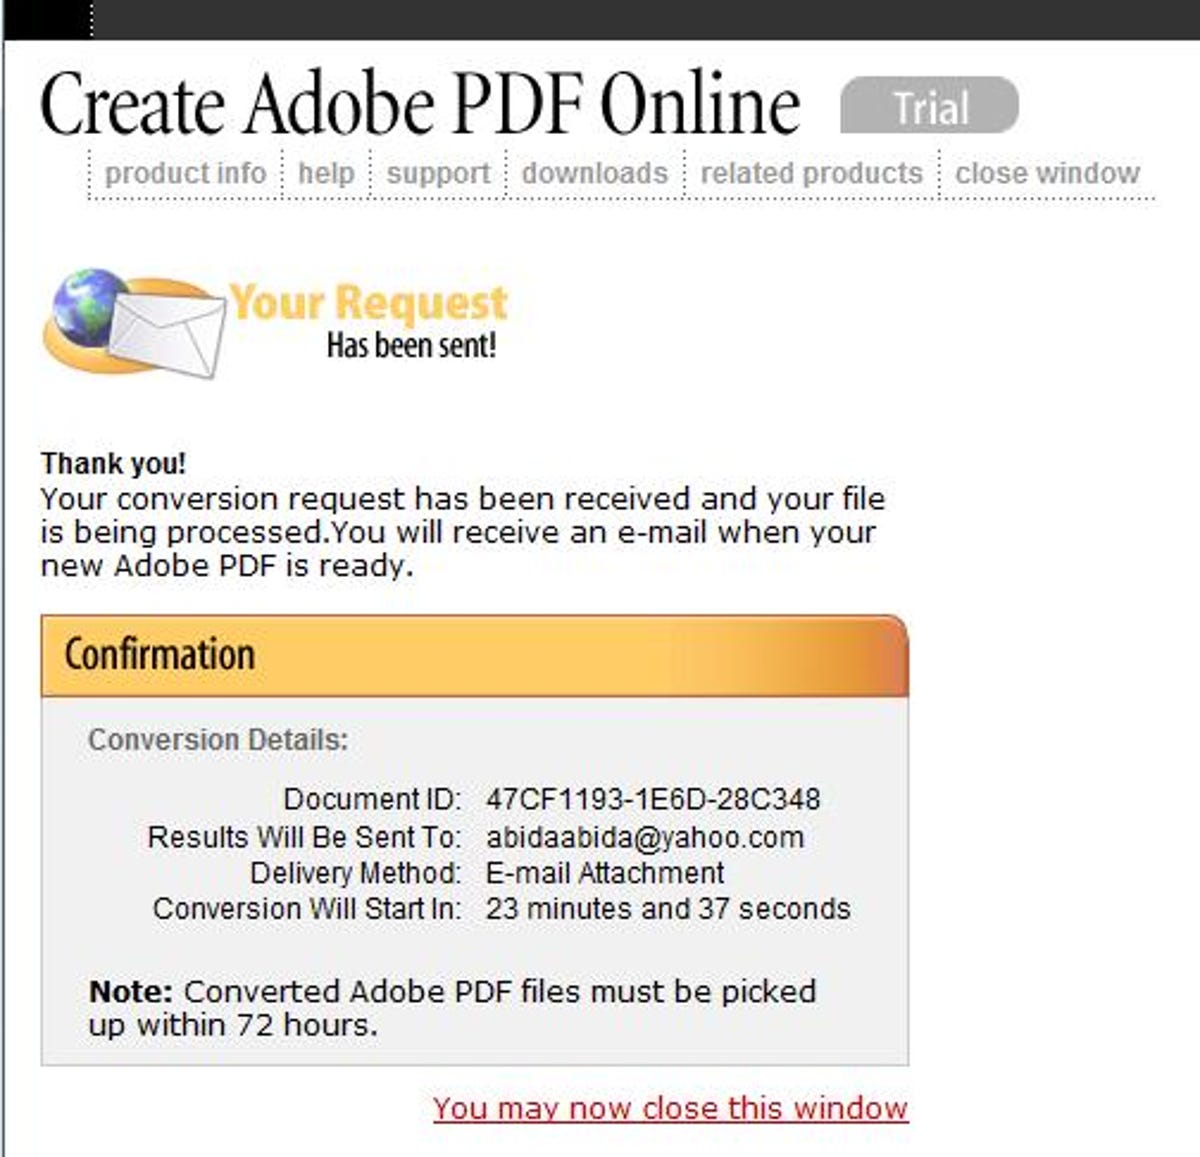 Create Adobe PDF Online confirmation screen